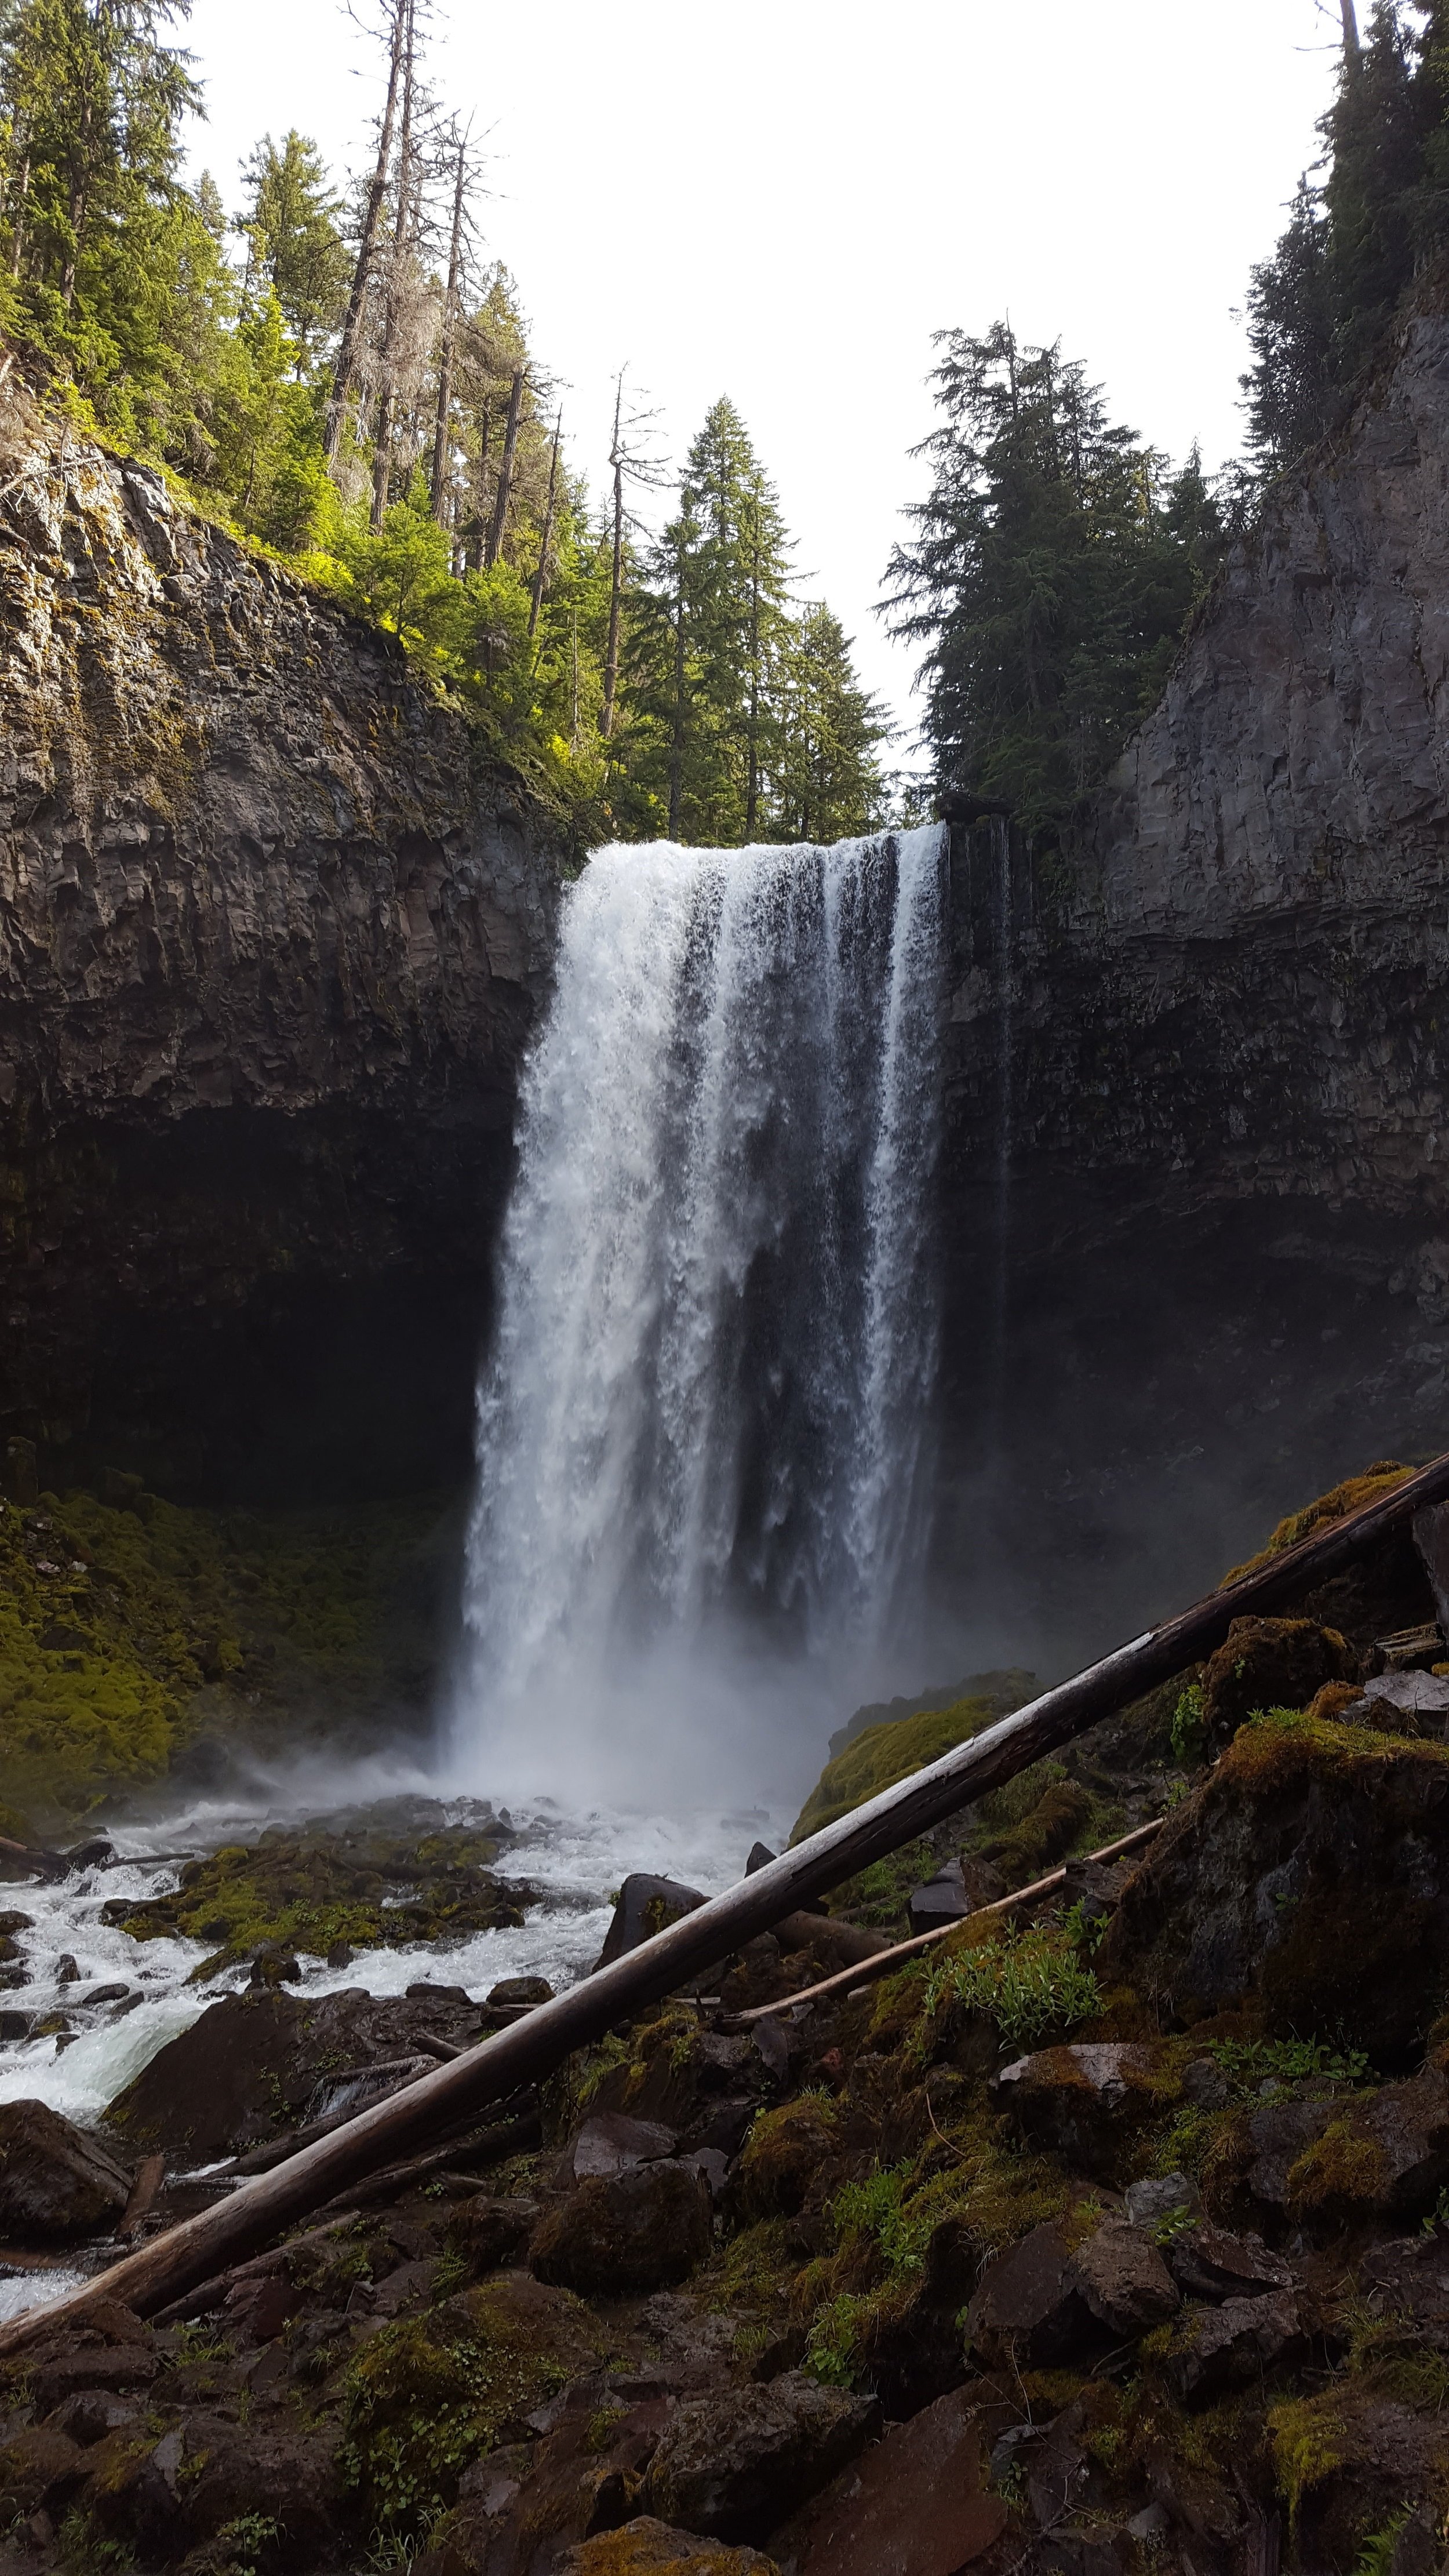  Waterfall at Mt. Hood, Oregon 